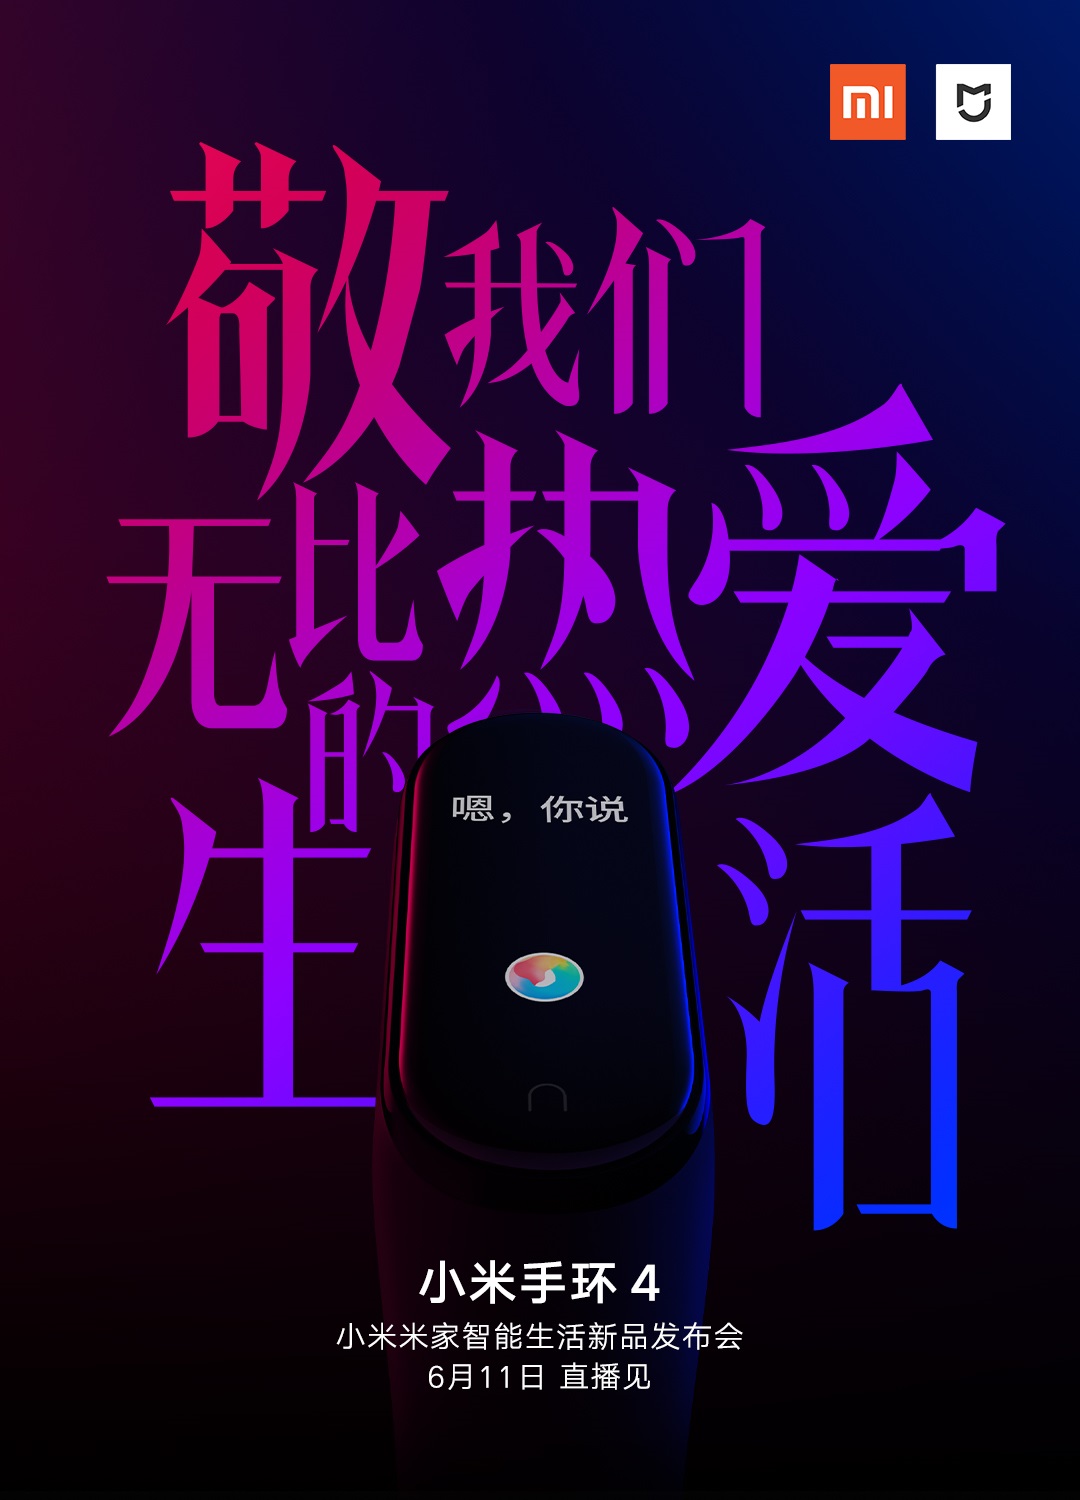 The Xiaomi Mi Band 4 official Xiaomi China poster. 